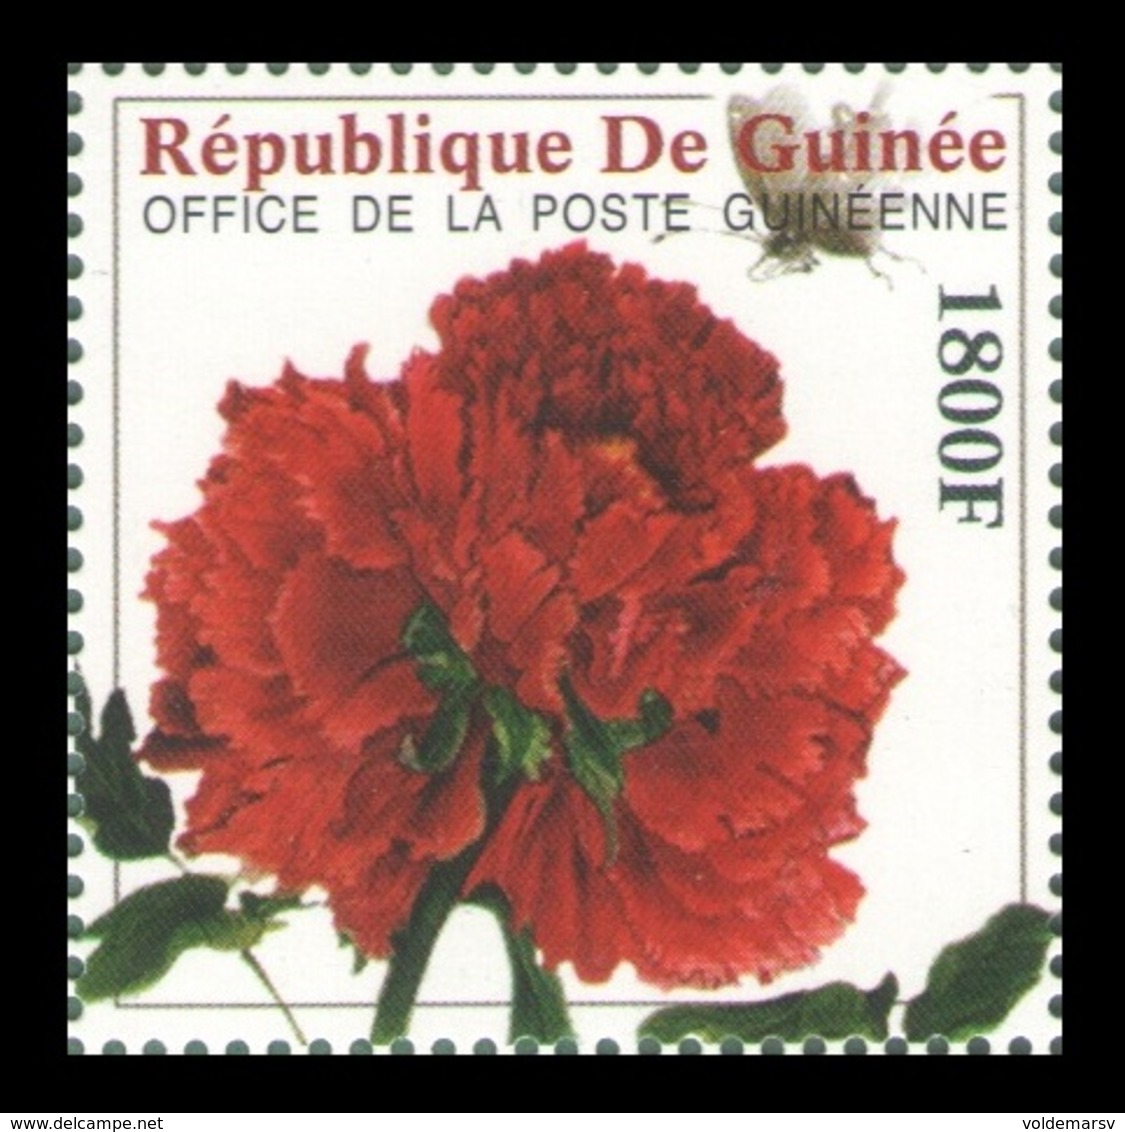 Guinea 2009 Mih. 6490 Flora. Flowers. Peony MNH ** - Guinée (1958-...)